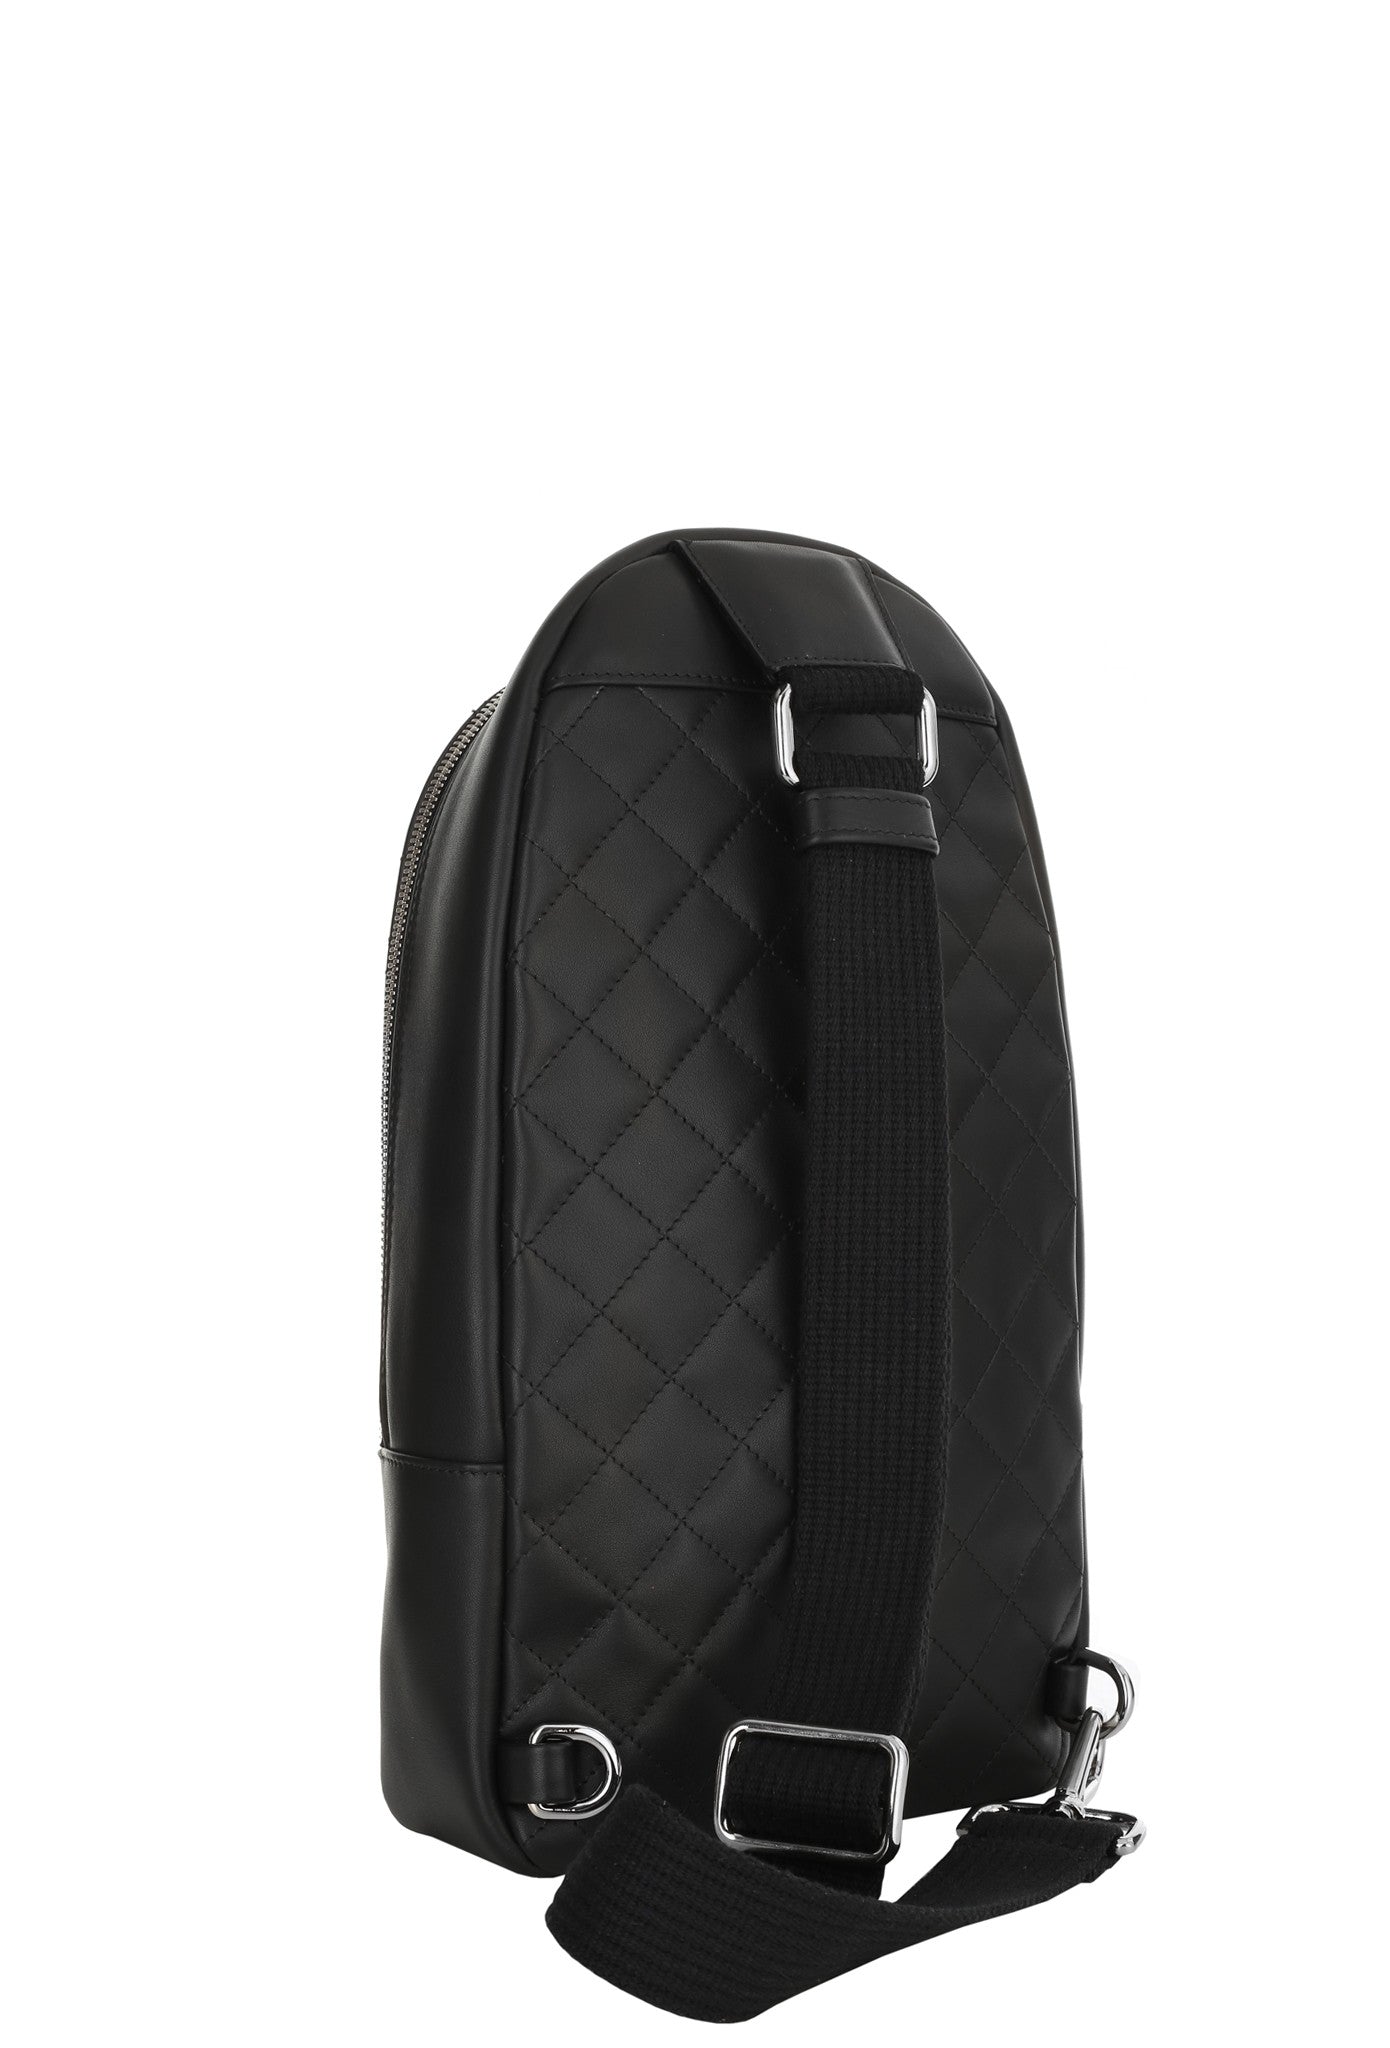 BE TRAVELING NAPA BLACK leather backpack